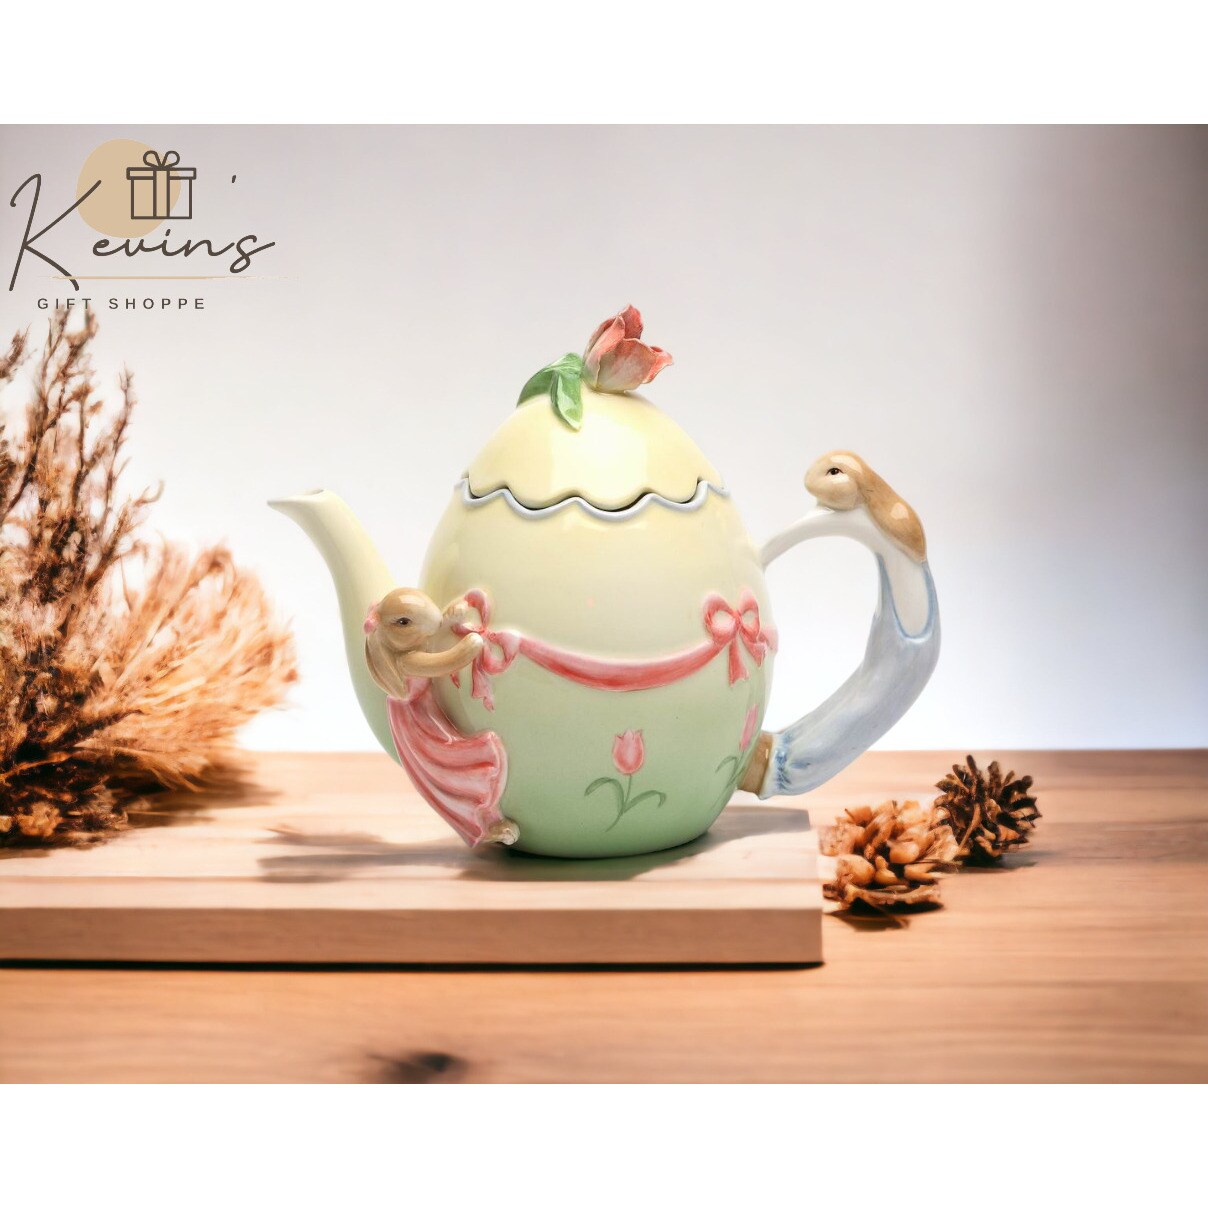 kevinsgiftshoppe Ceramic Easter Rabbits Around Egg Shaped Teapot   Tea Party Decor Cafe Decor